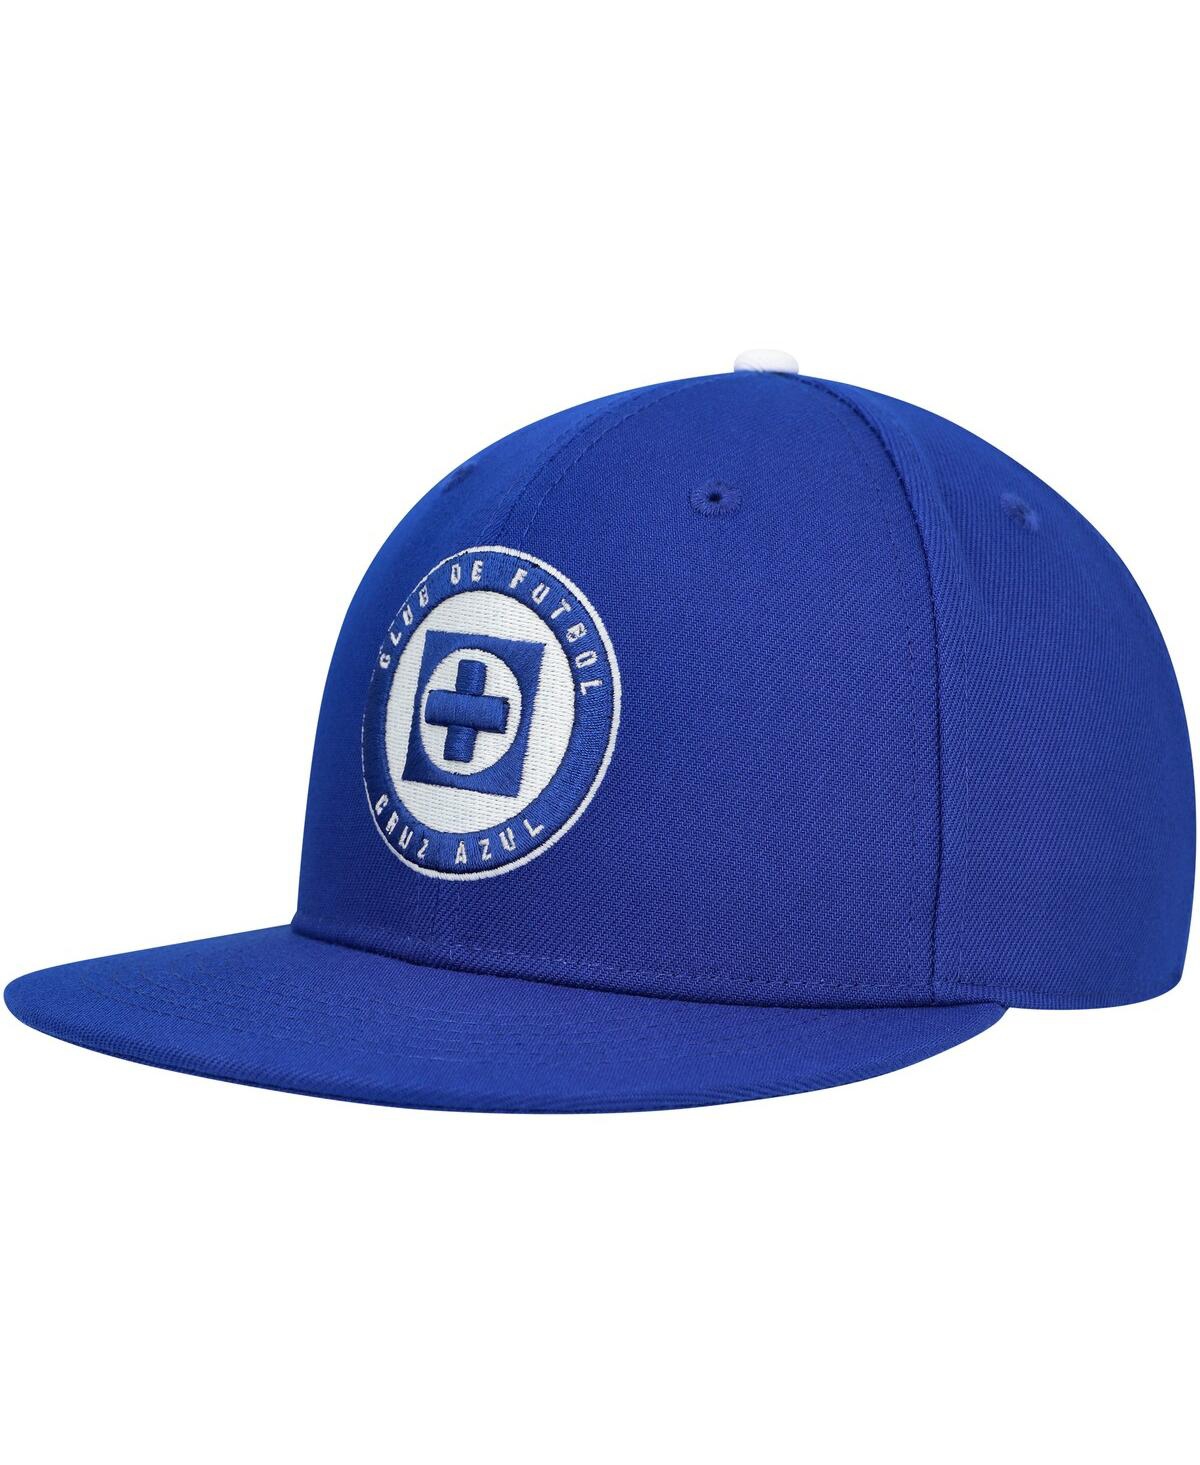 Fan Ink Men's Royal Cruz Azul America's Game Snapback Hat